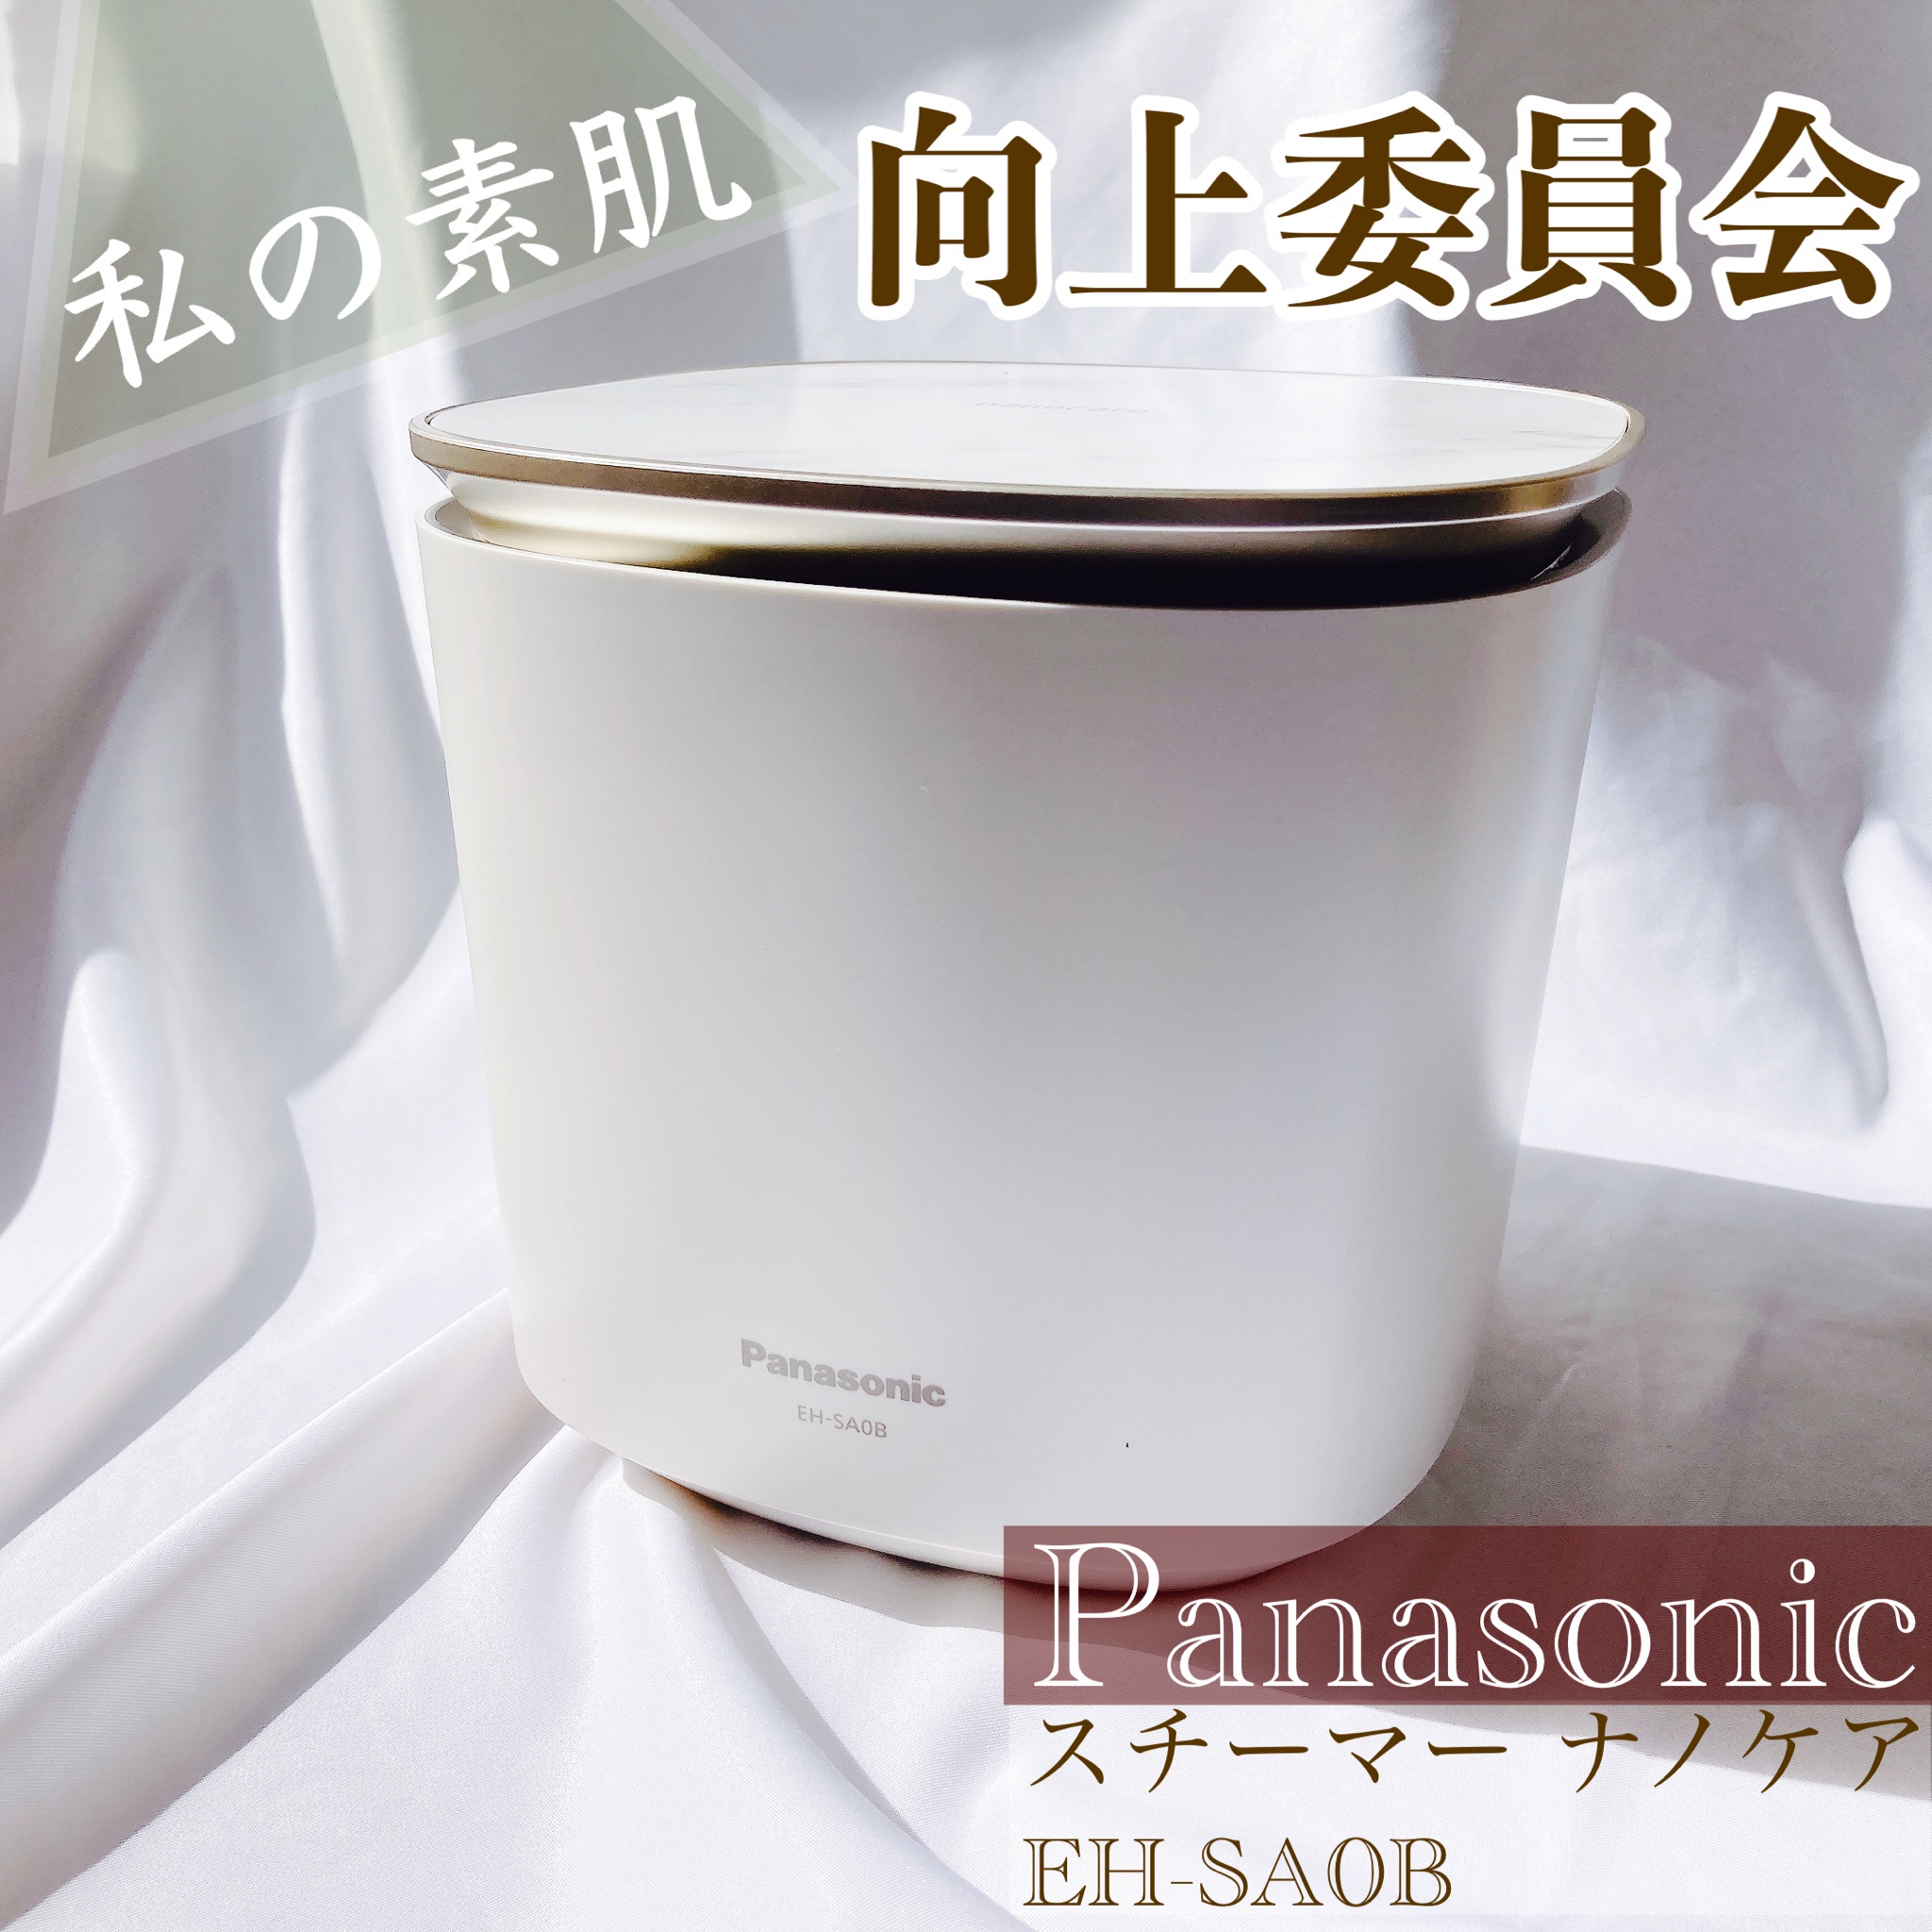 Panasonic nanocare EH-SAOB - 美容機器